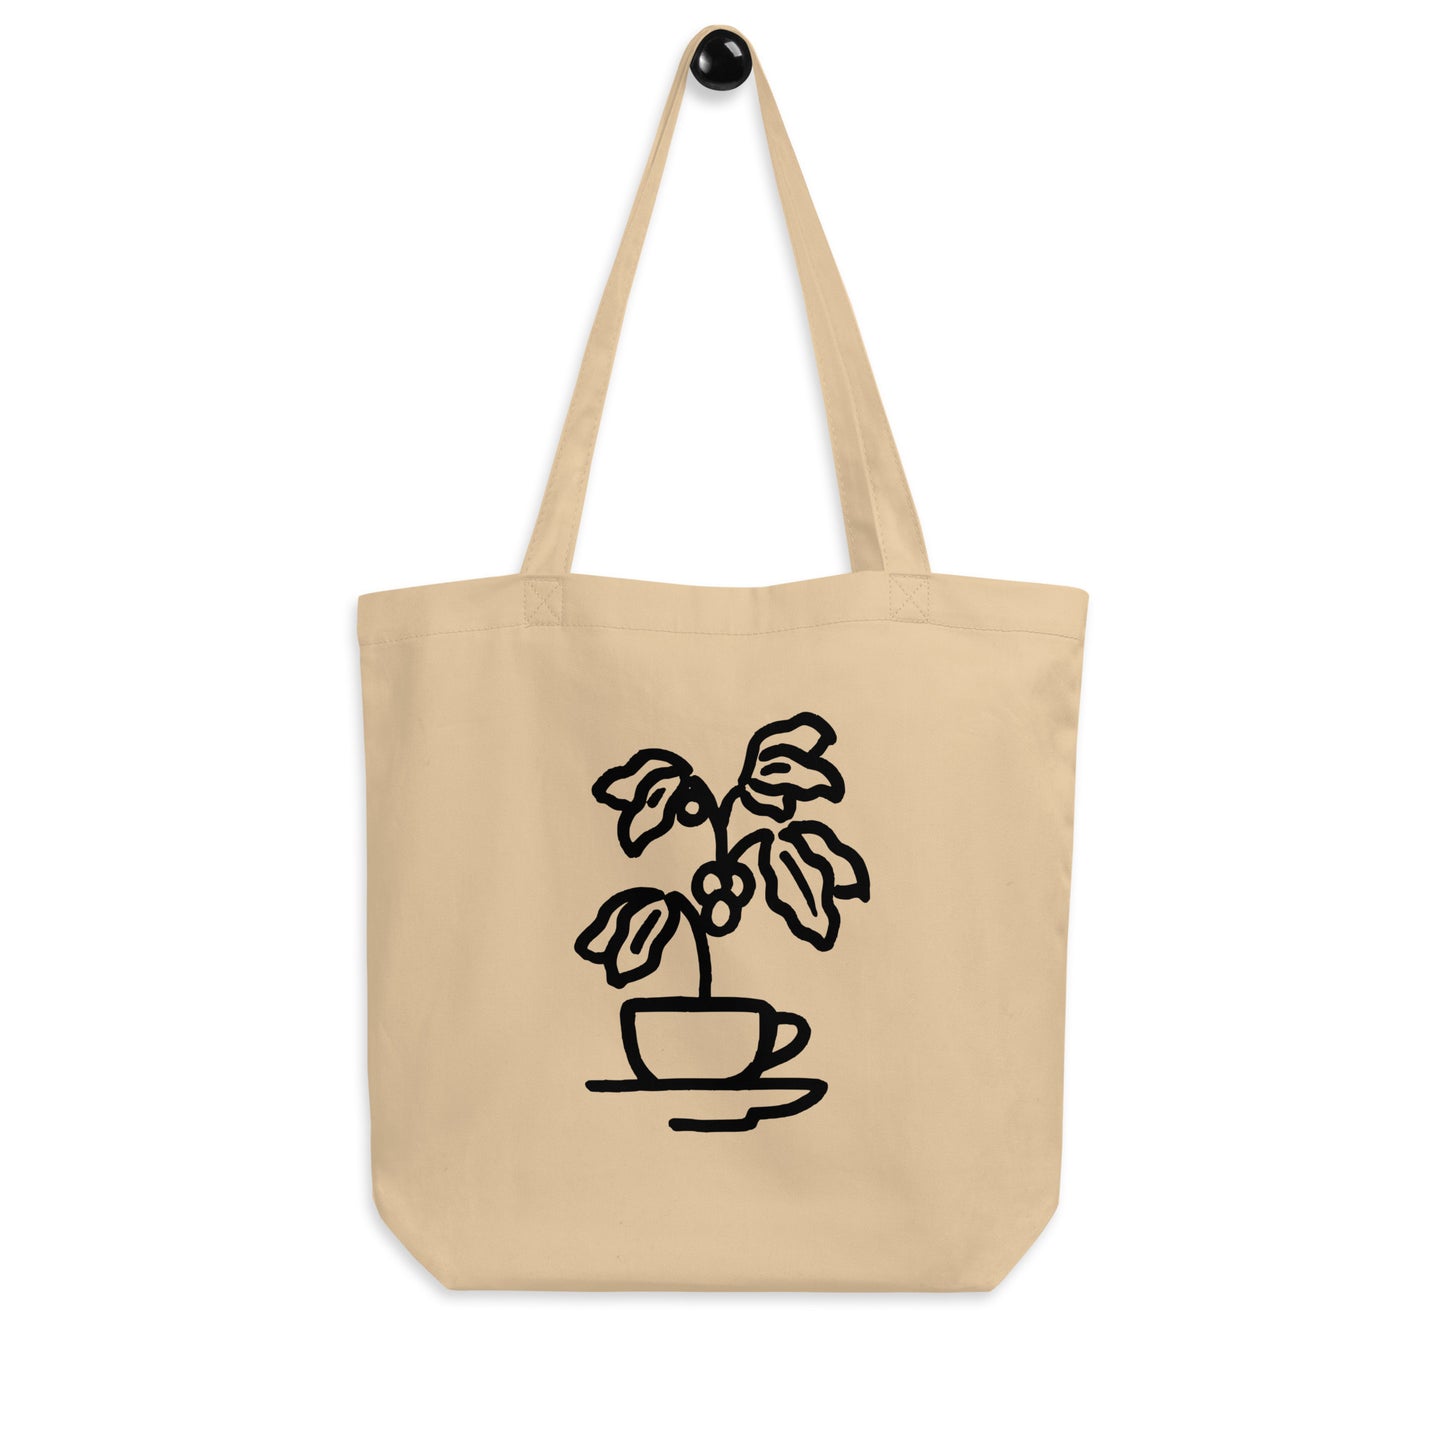 H+S x Jeerg = Coffee Plant Tote Bag